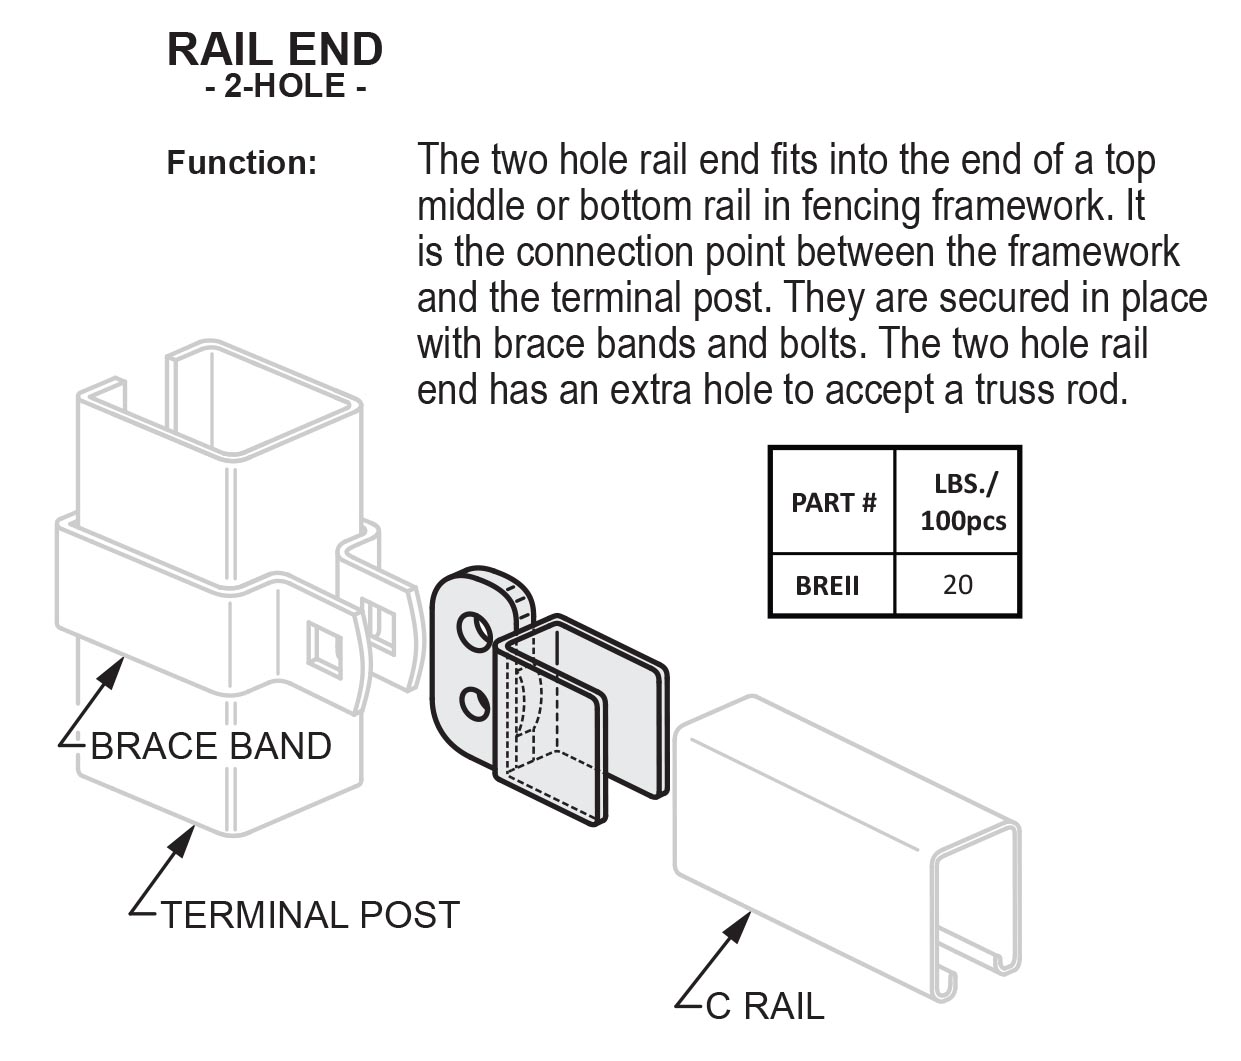 Rail End - 2 Hole